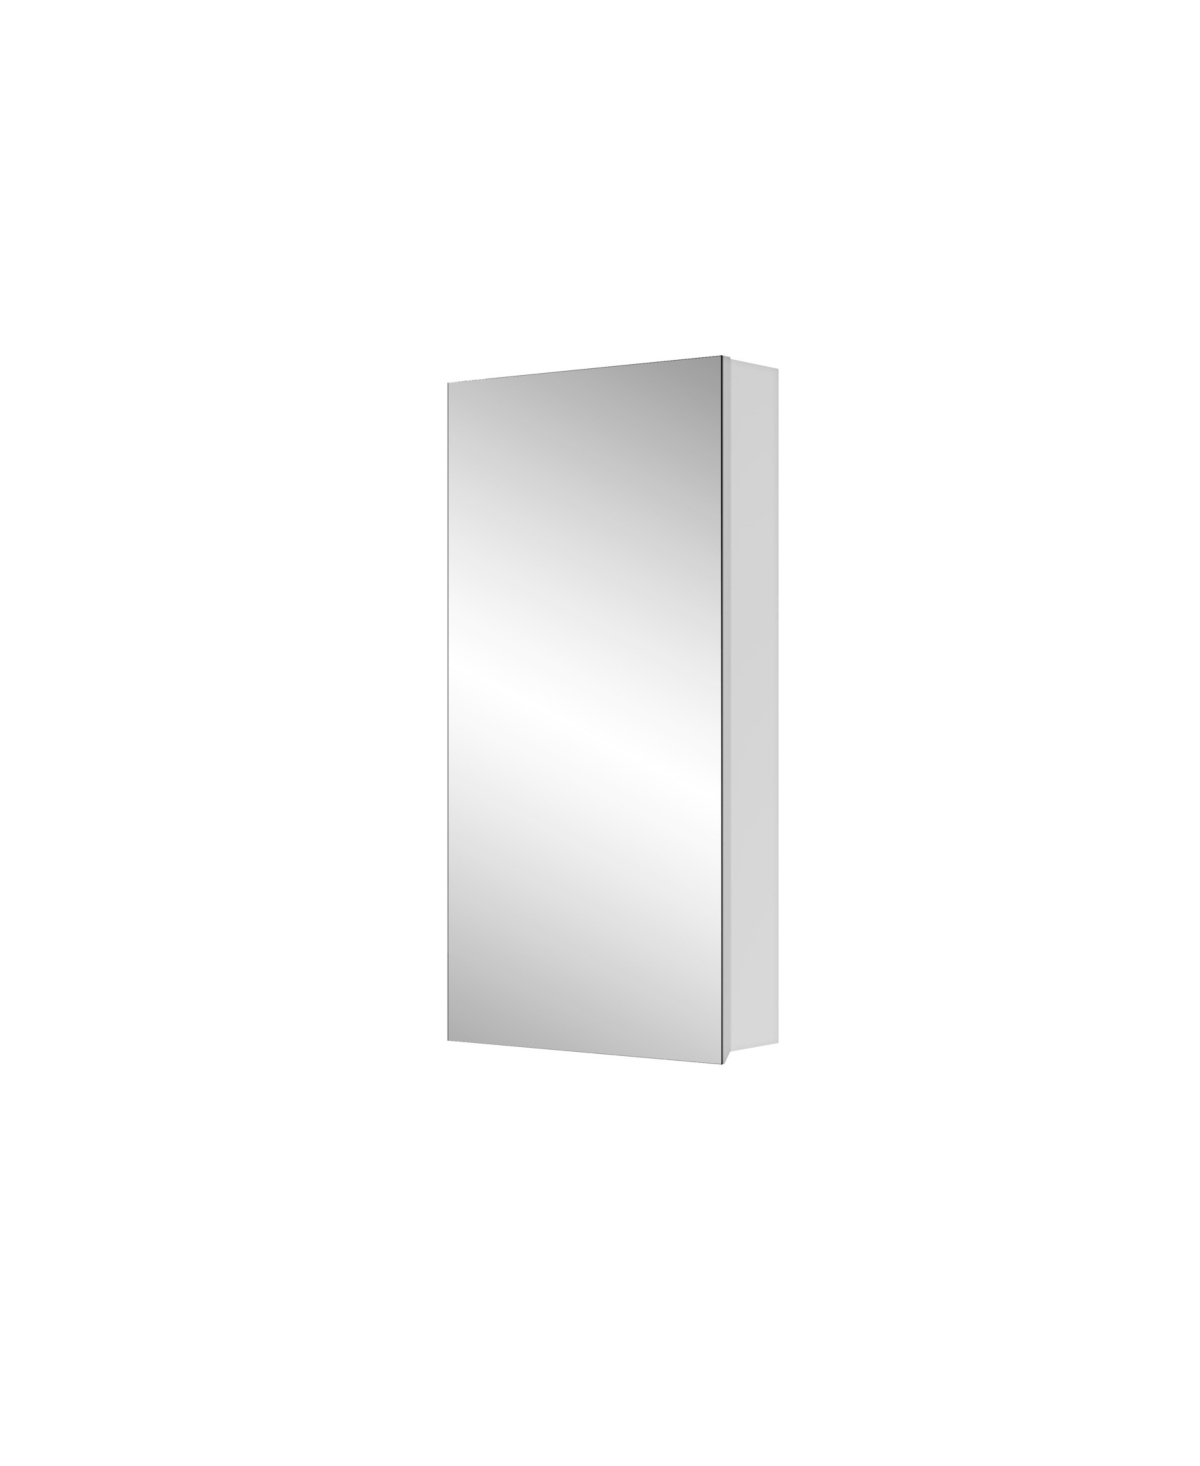 15x30 Single-Door Medicine Cabinet - Silver - White